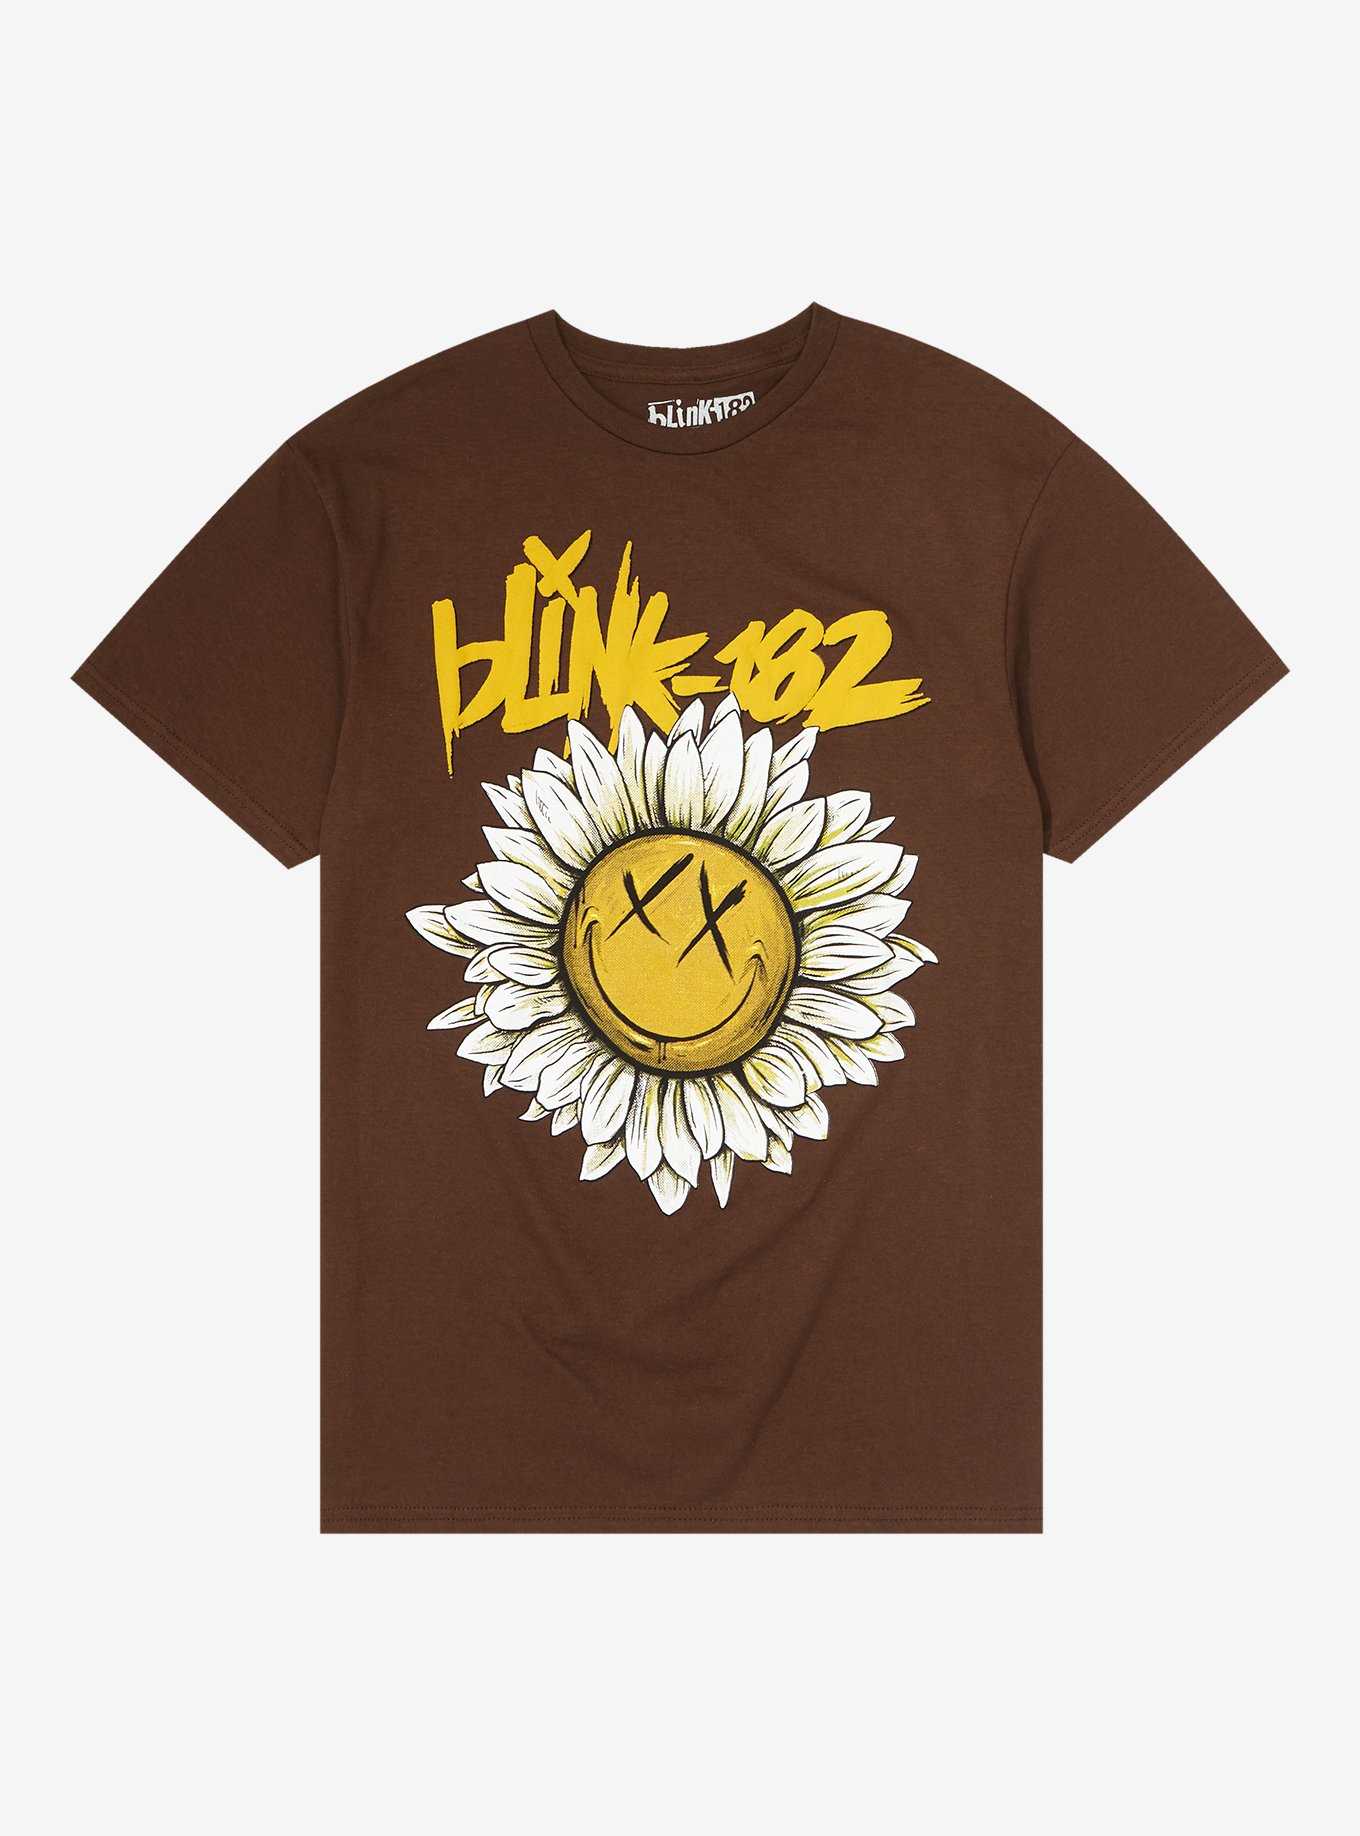 Blink-182 Sunflower Face Logo Boyfriend Fit Girls T-Shirt, BROWN, hi-res